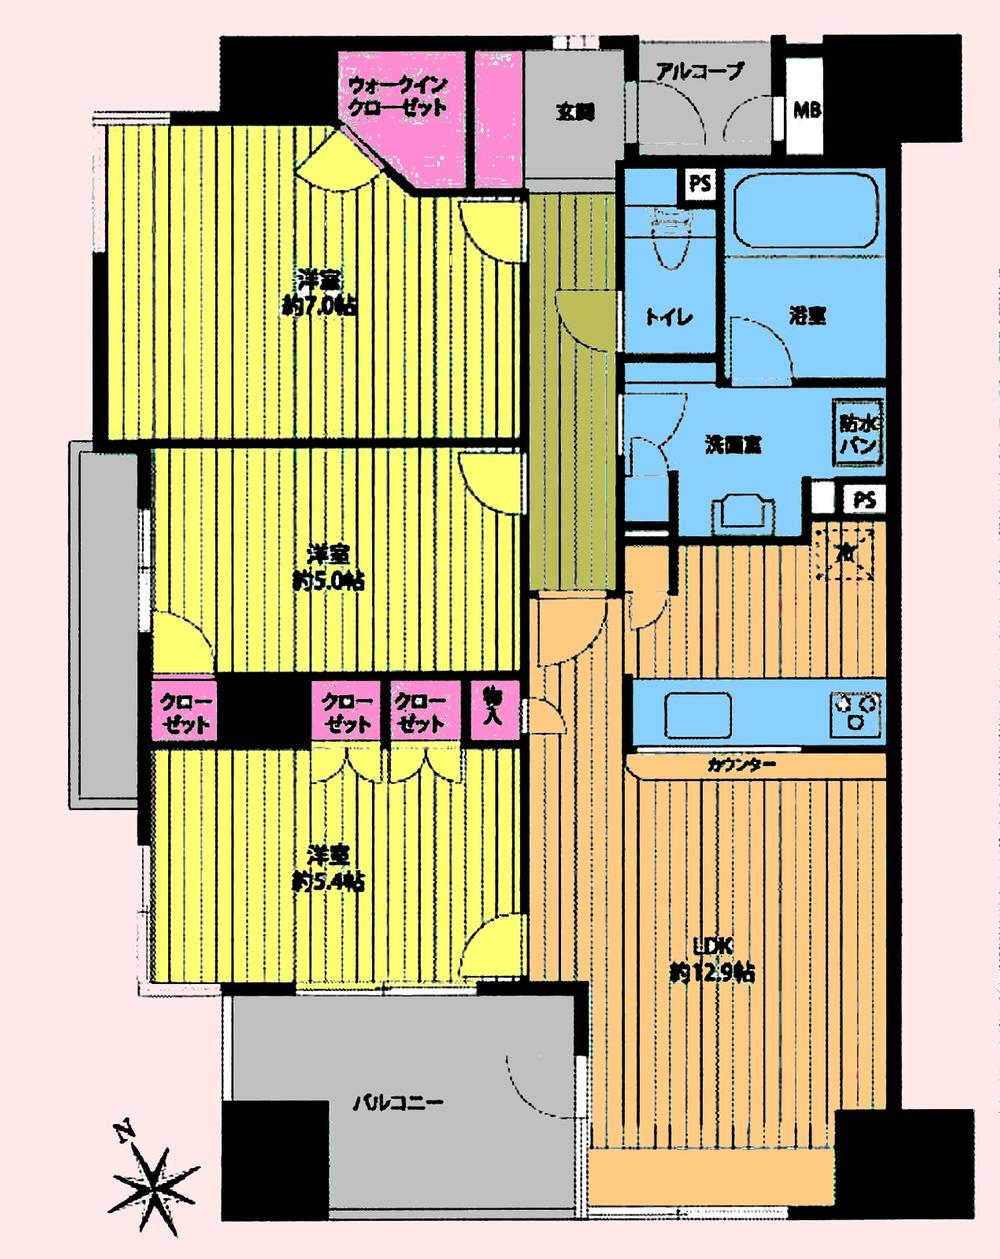 Floor plan. 3LDK, Price 23,980,000 yen, Occupied area 68.48 sq m , Balcony area 6.6 sq m